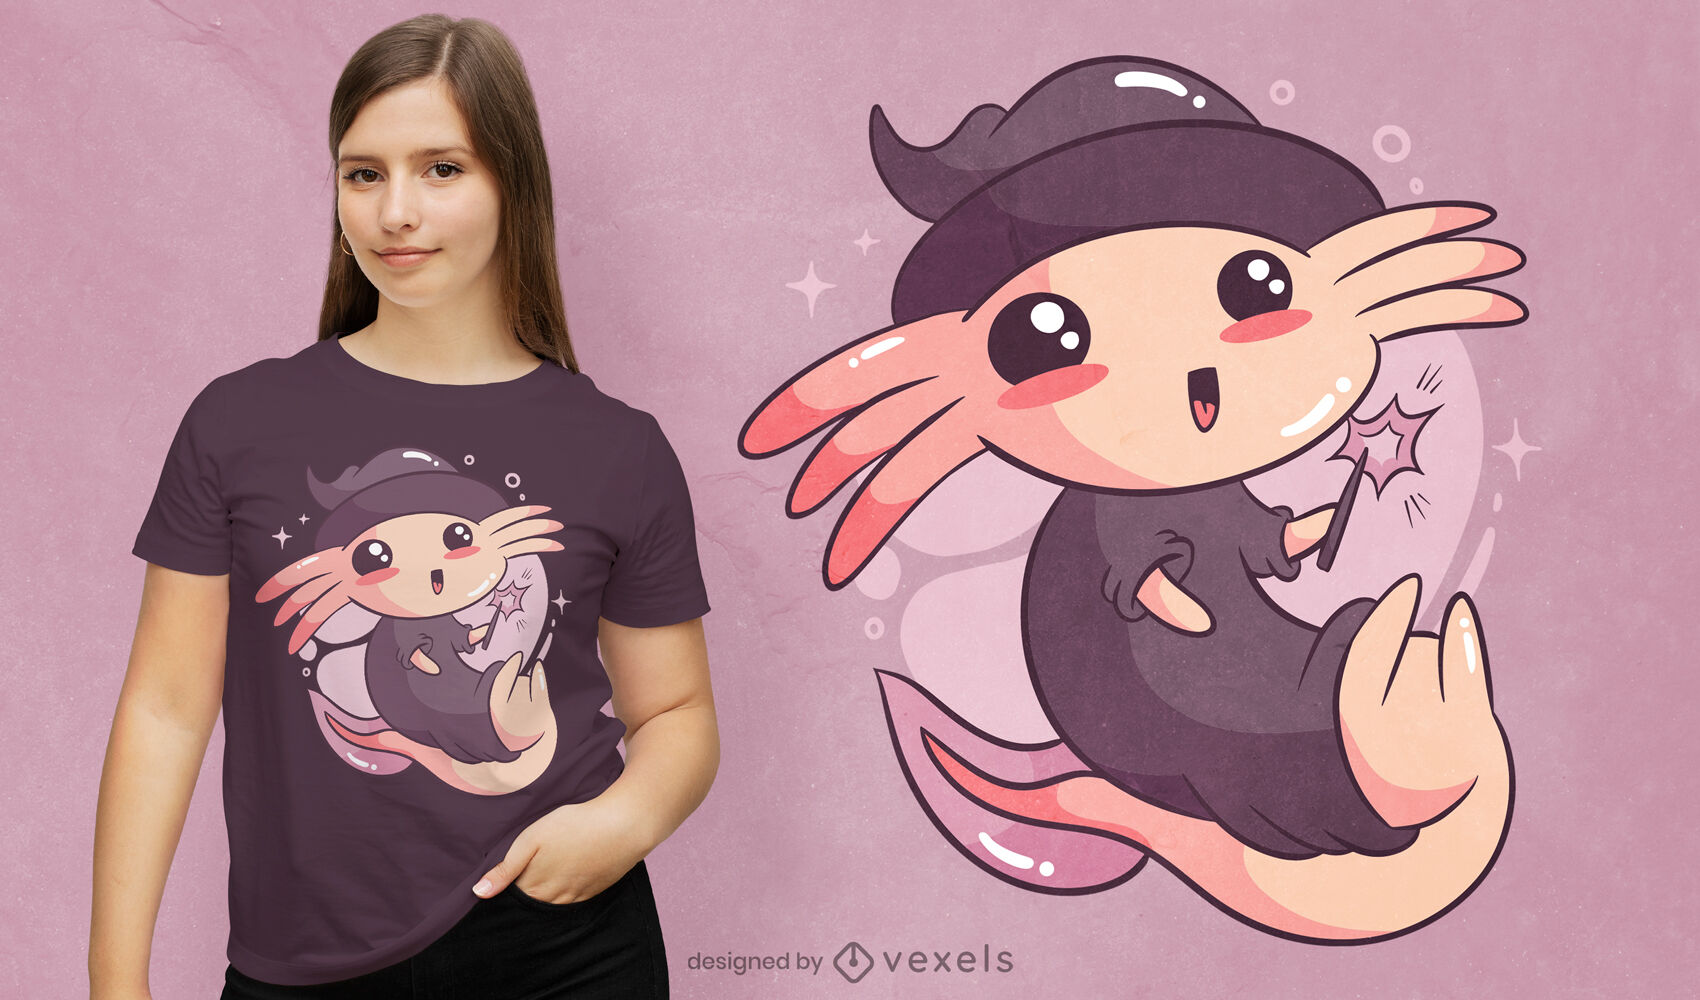 Axolotl T-shirt design